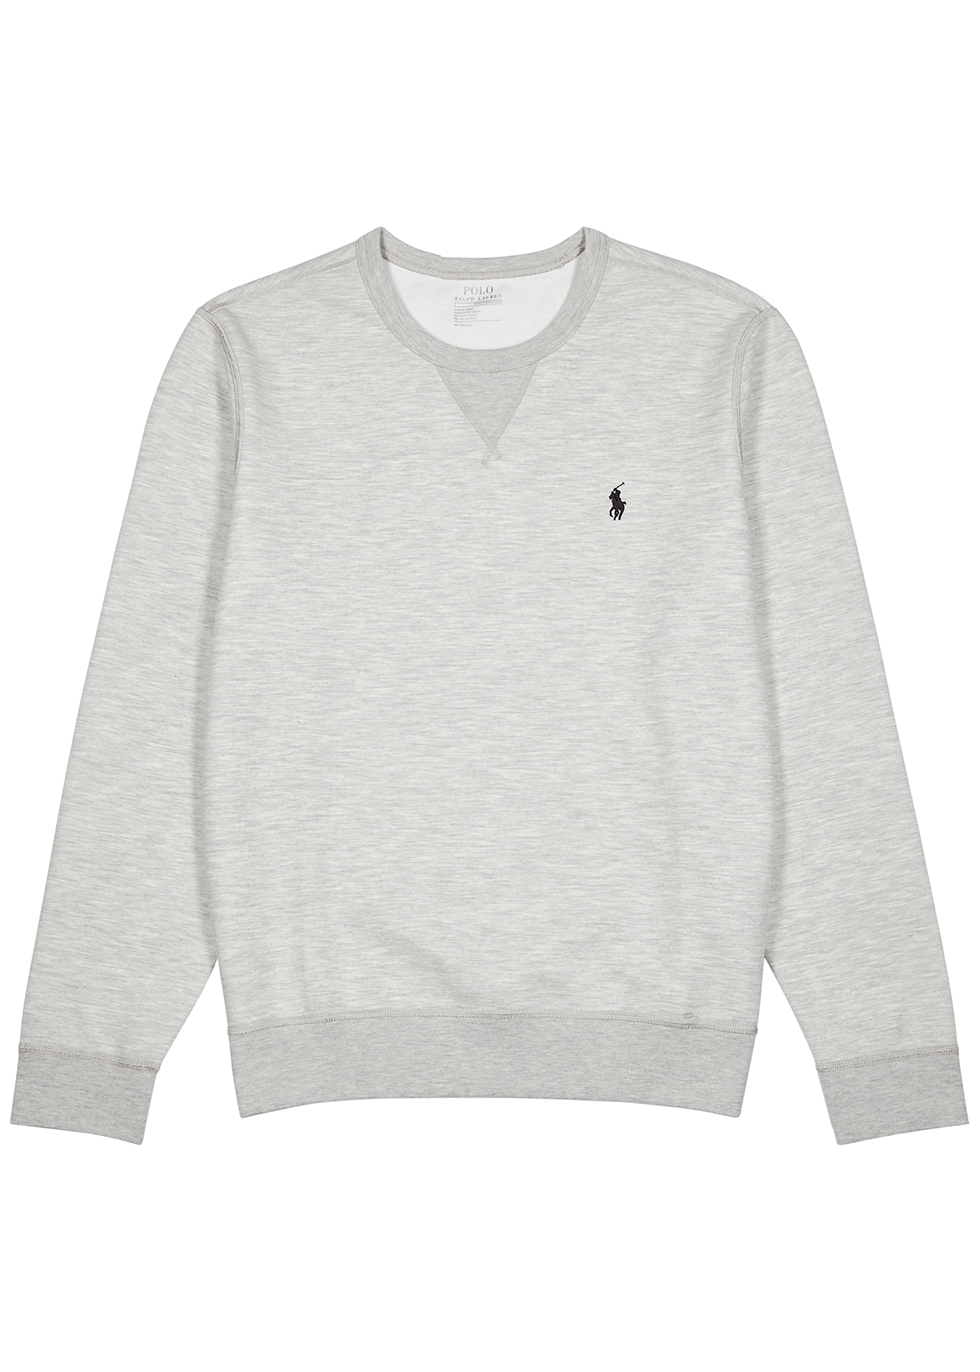 Polo Ralph Lauren Performance grey jersey sweatshirt - Harvey Nichols